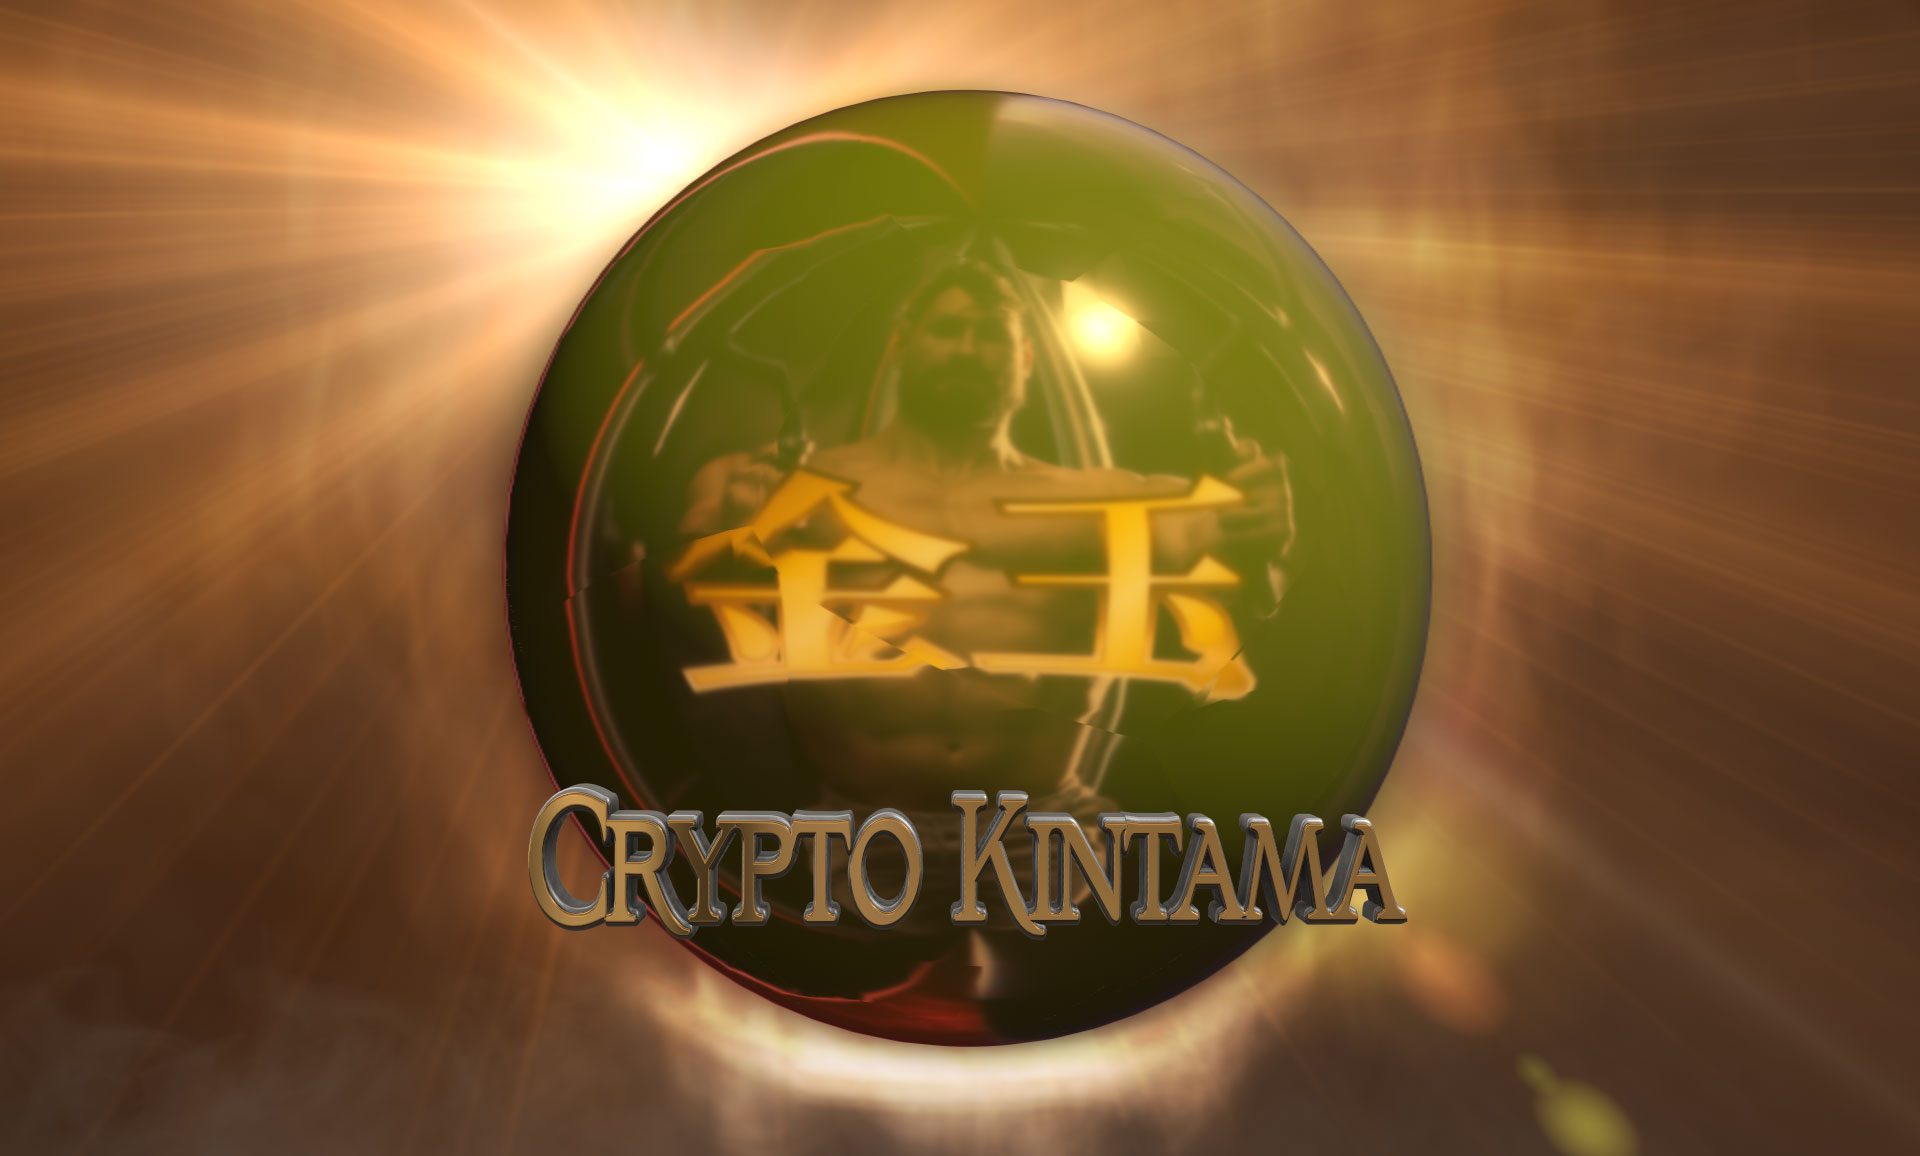 Crypto Kintama